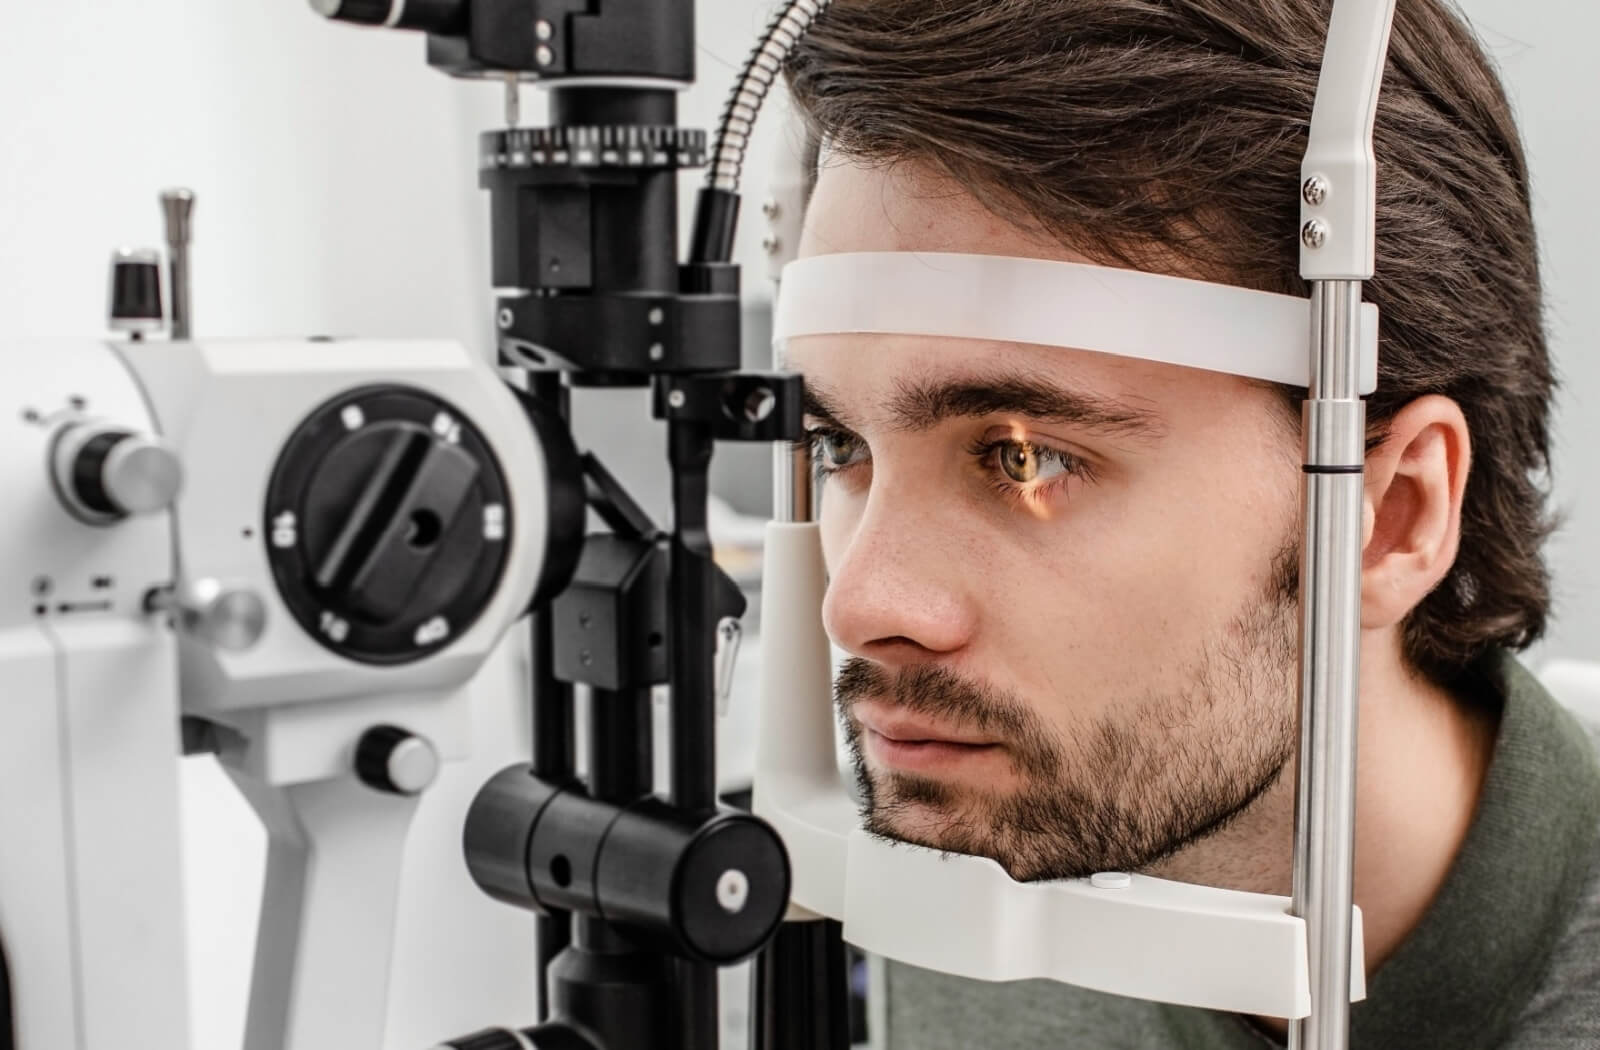 An eye doctor tests a woman's eyesight with the Snellen eye chart